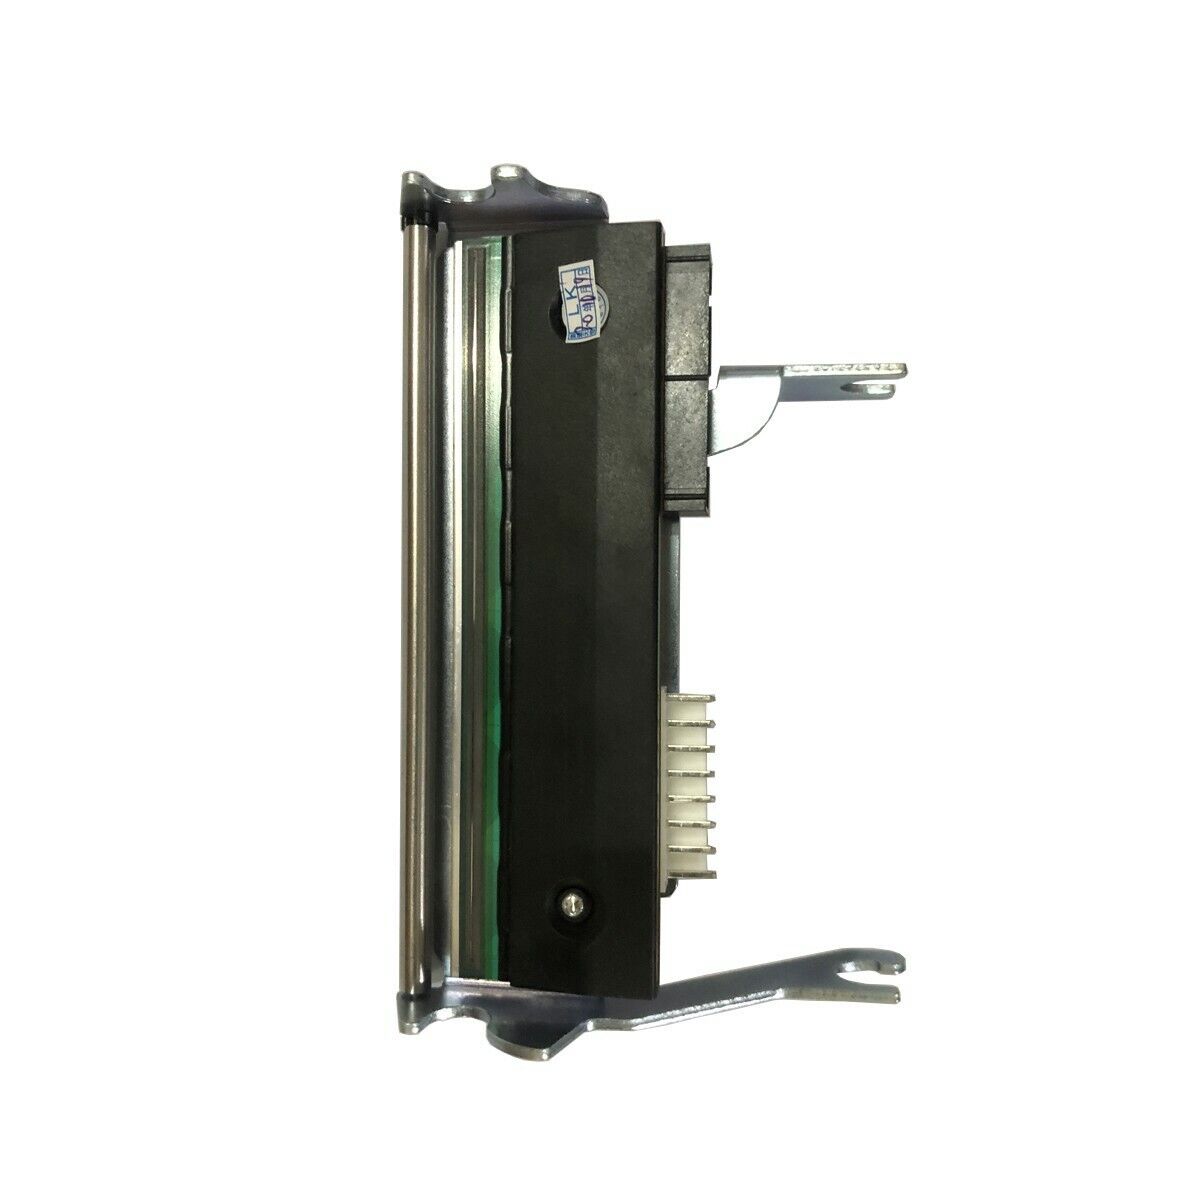 710-129S-001 Printhead For Intermec PM43 PM42 Thermal Printer 203dpi Genuine